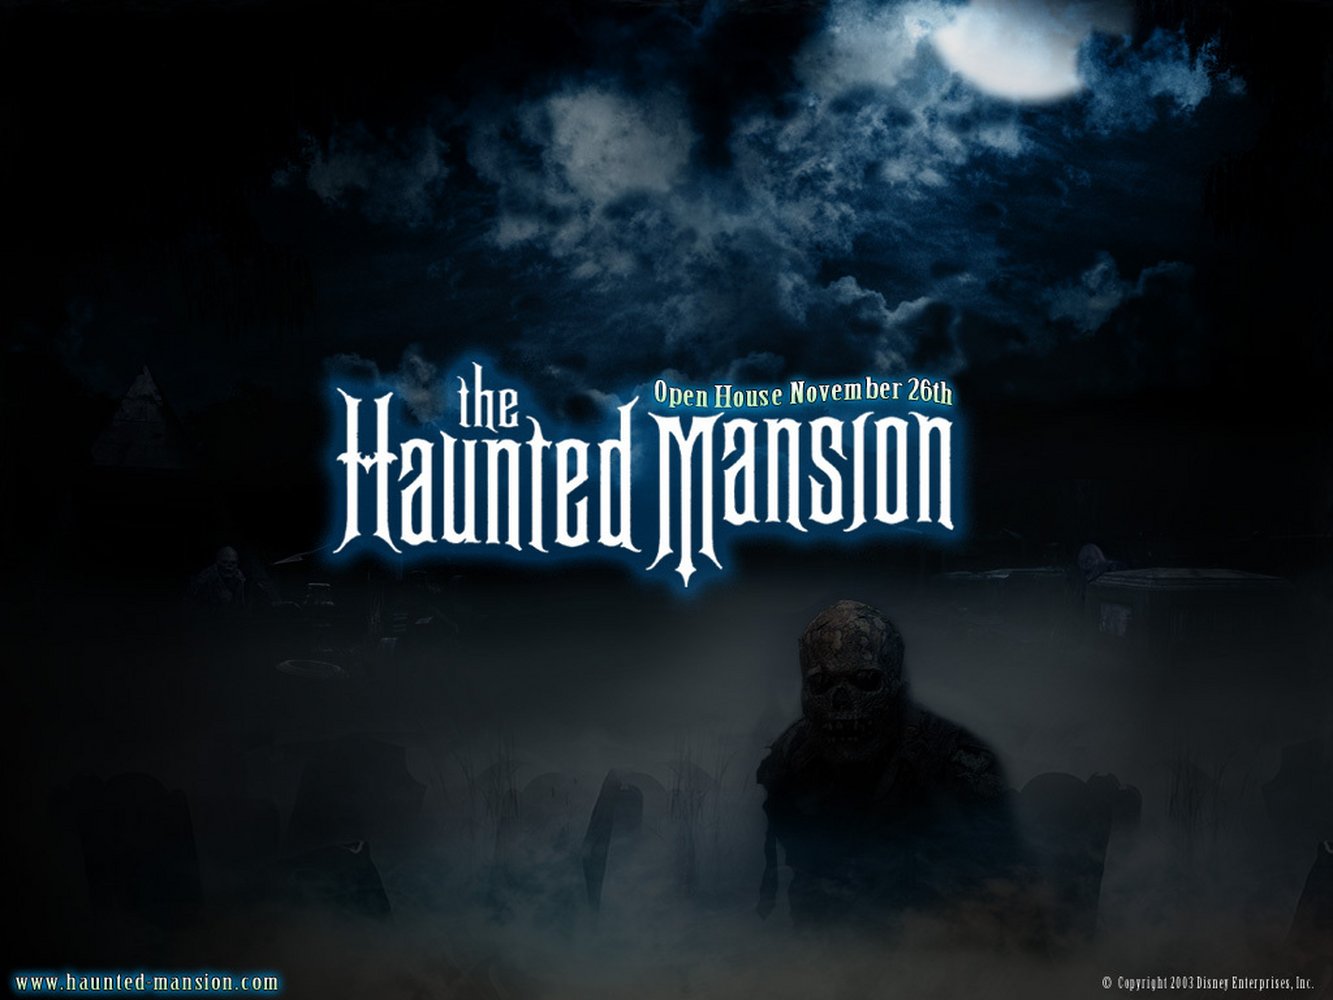 Haunted mansion 2. The Haunted Mansion 2003. “Особняк с привидениями” (2003) обложка.